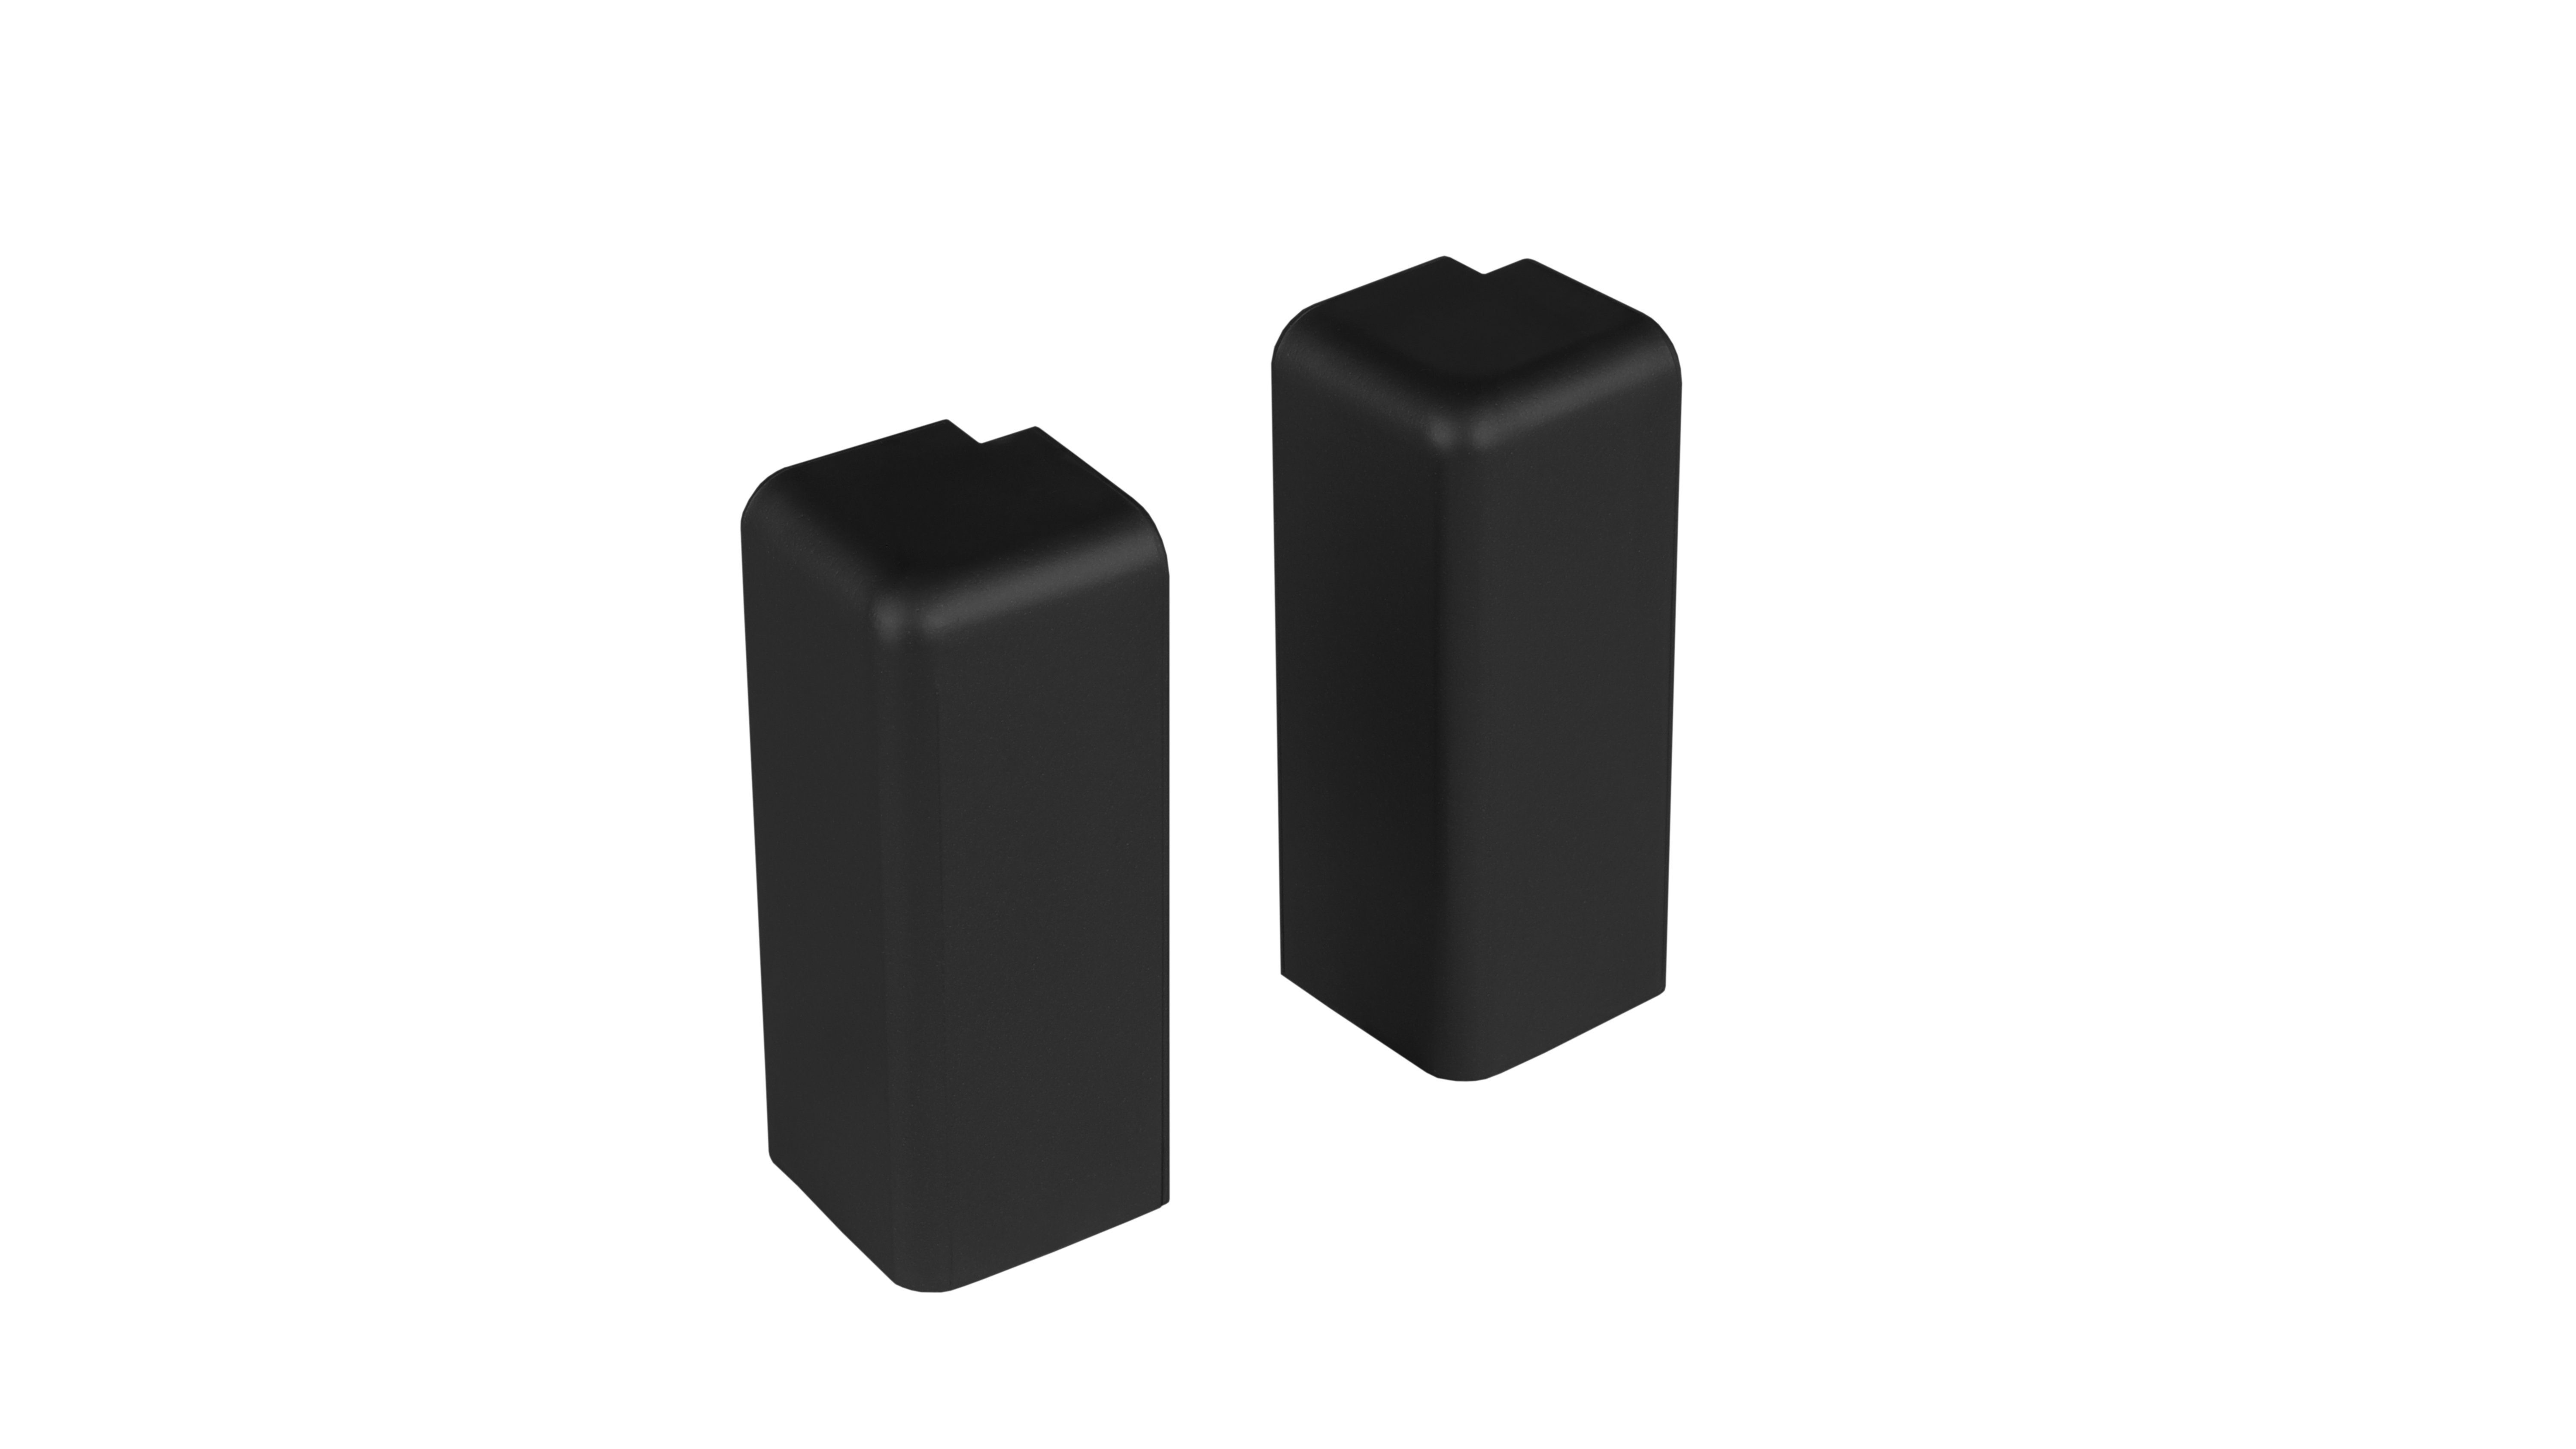 LEISTENHAMMER DER SOCKELLEISTEN SHOP Sockelleiste Sockelleisten Aussenecke schwarz 16x58 mm 2er Set, L: 1.6 cm, H: 5.8 cm, 2-St.